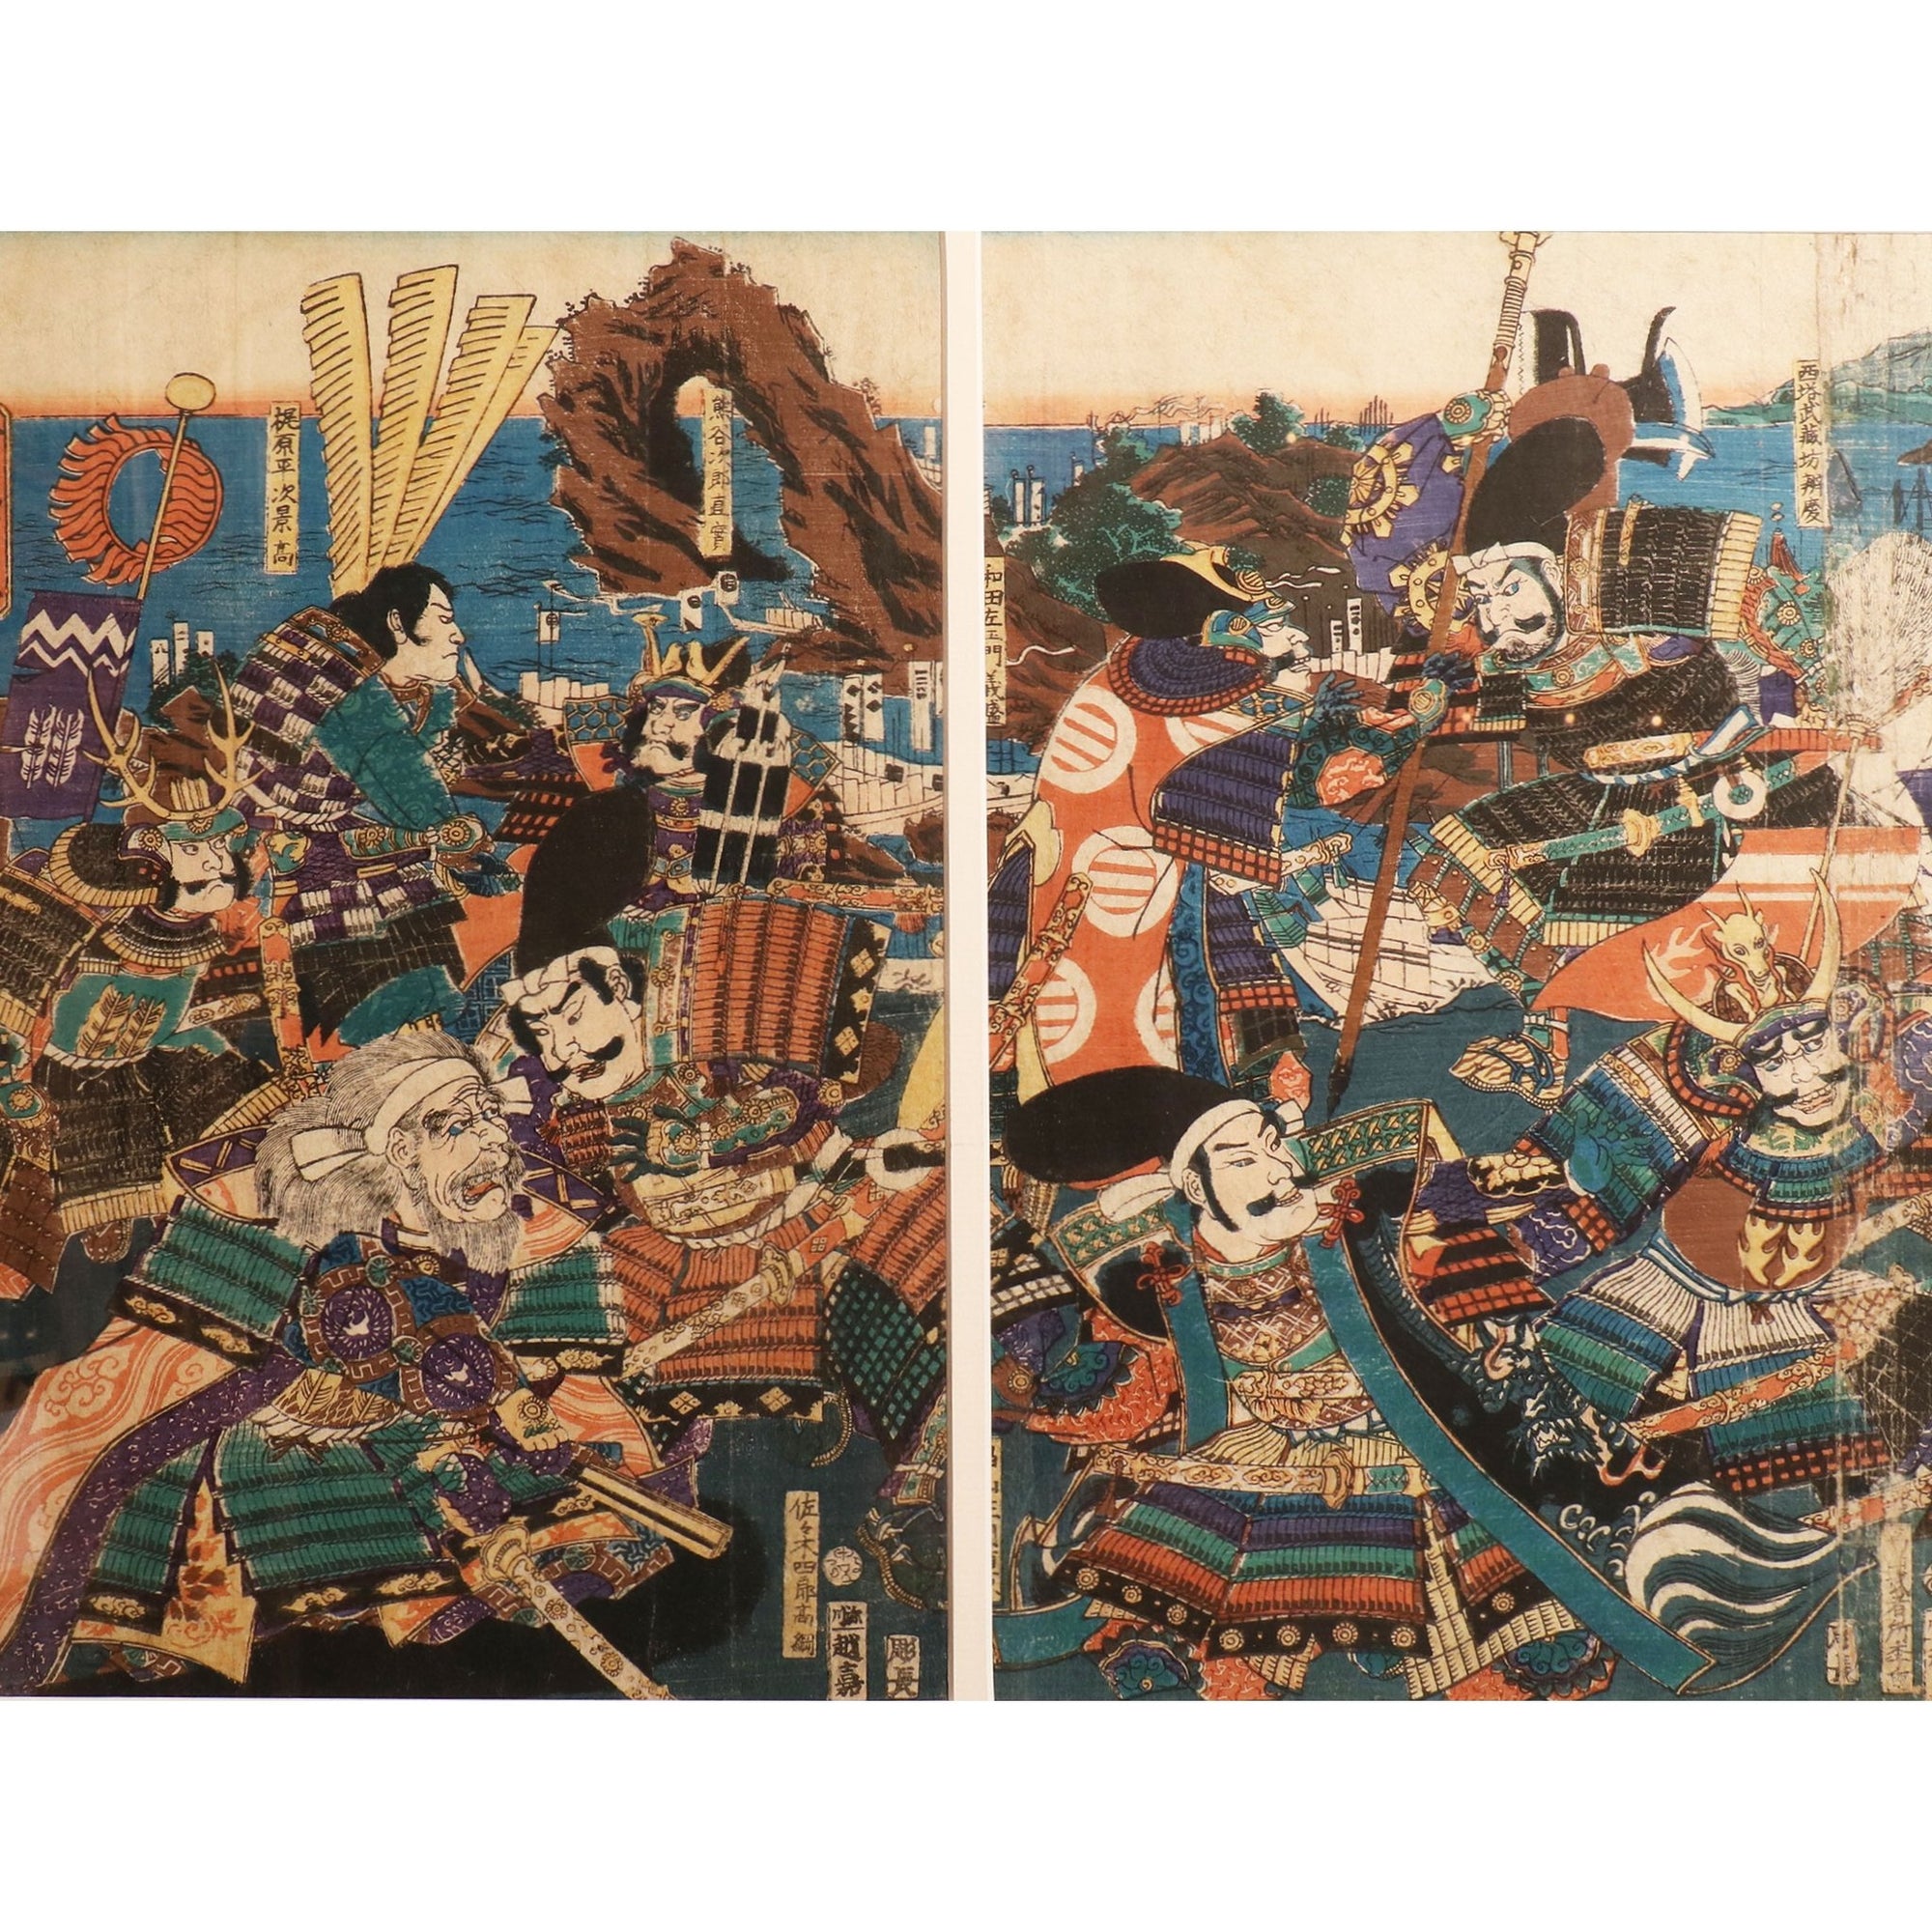 Framed Japanese Woodblock Print: "Minamoto Yoshitsune and the Reversed Oars" by Yoshitura - Edo Period | Indigo Oriental Antiques